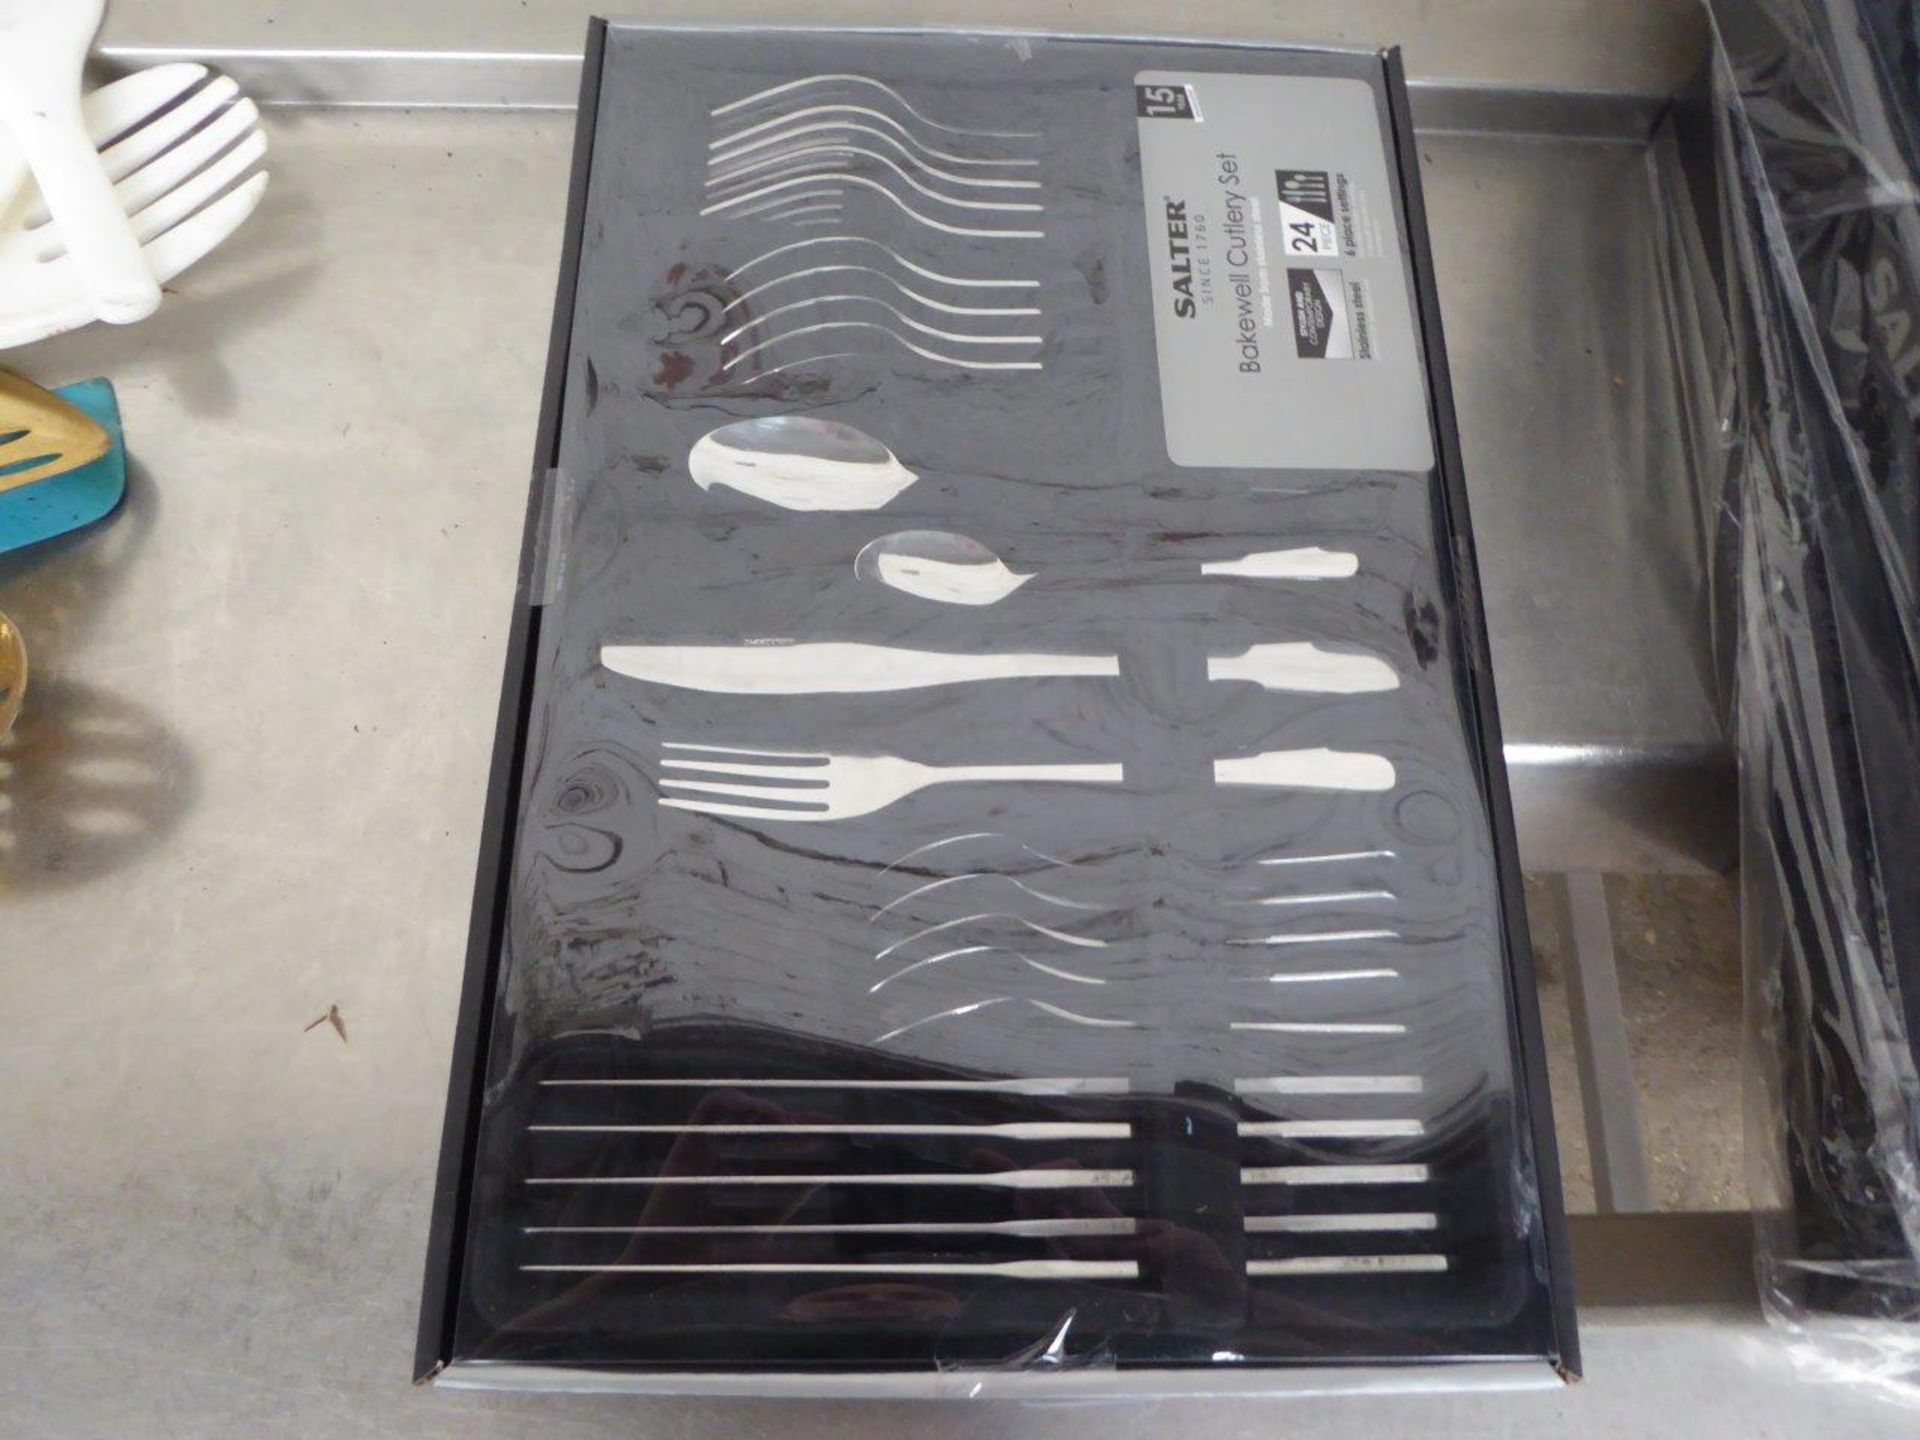 Salter 24pc cutlery set